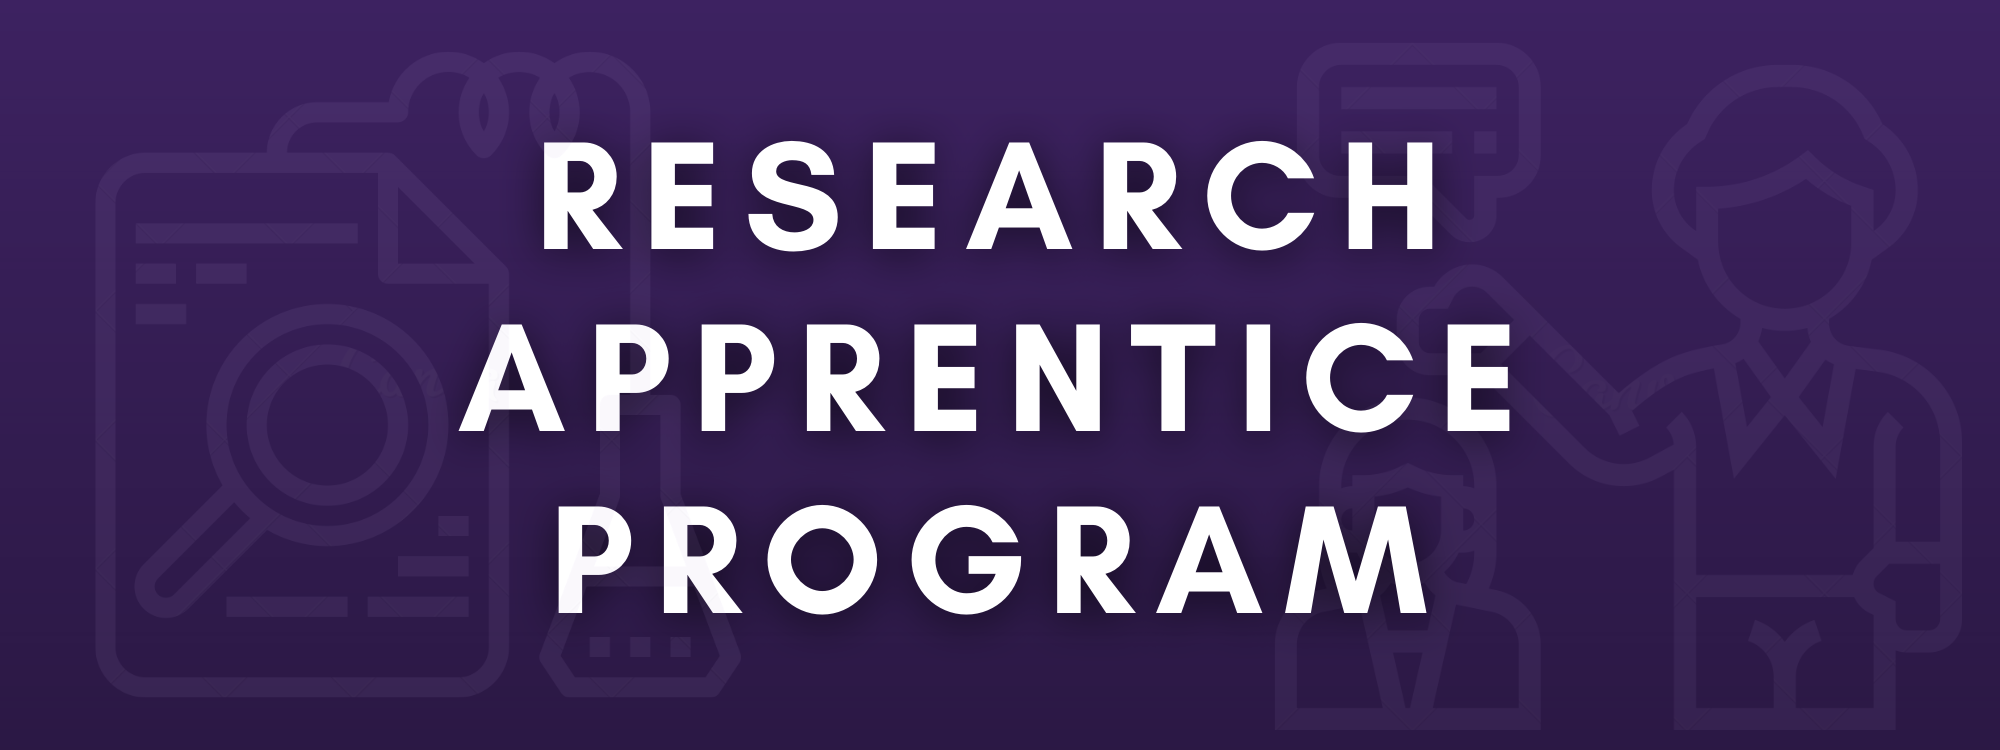 Research Apprenticeship Program